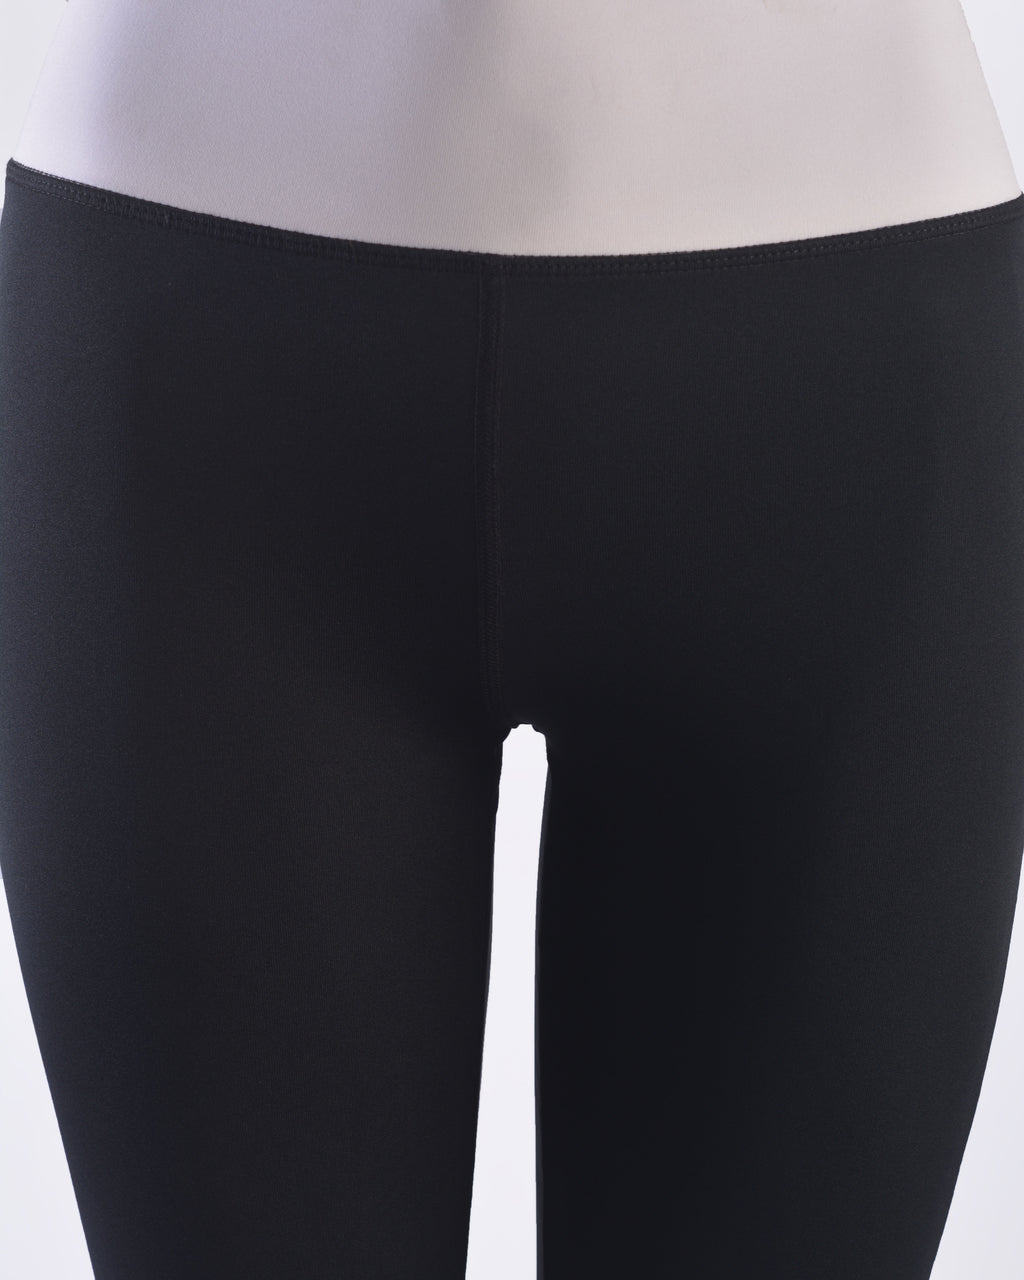 Bally Fold-Over Flare Yoga Pant Black And White